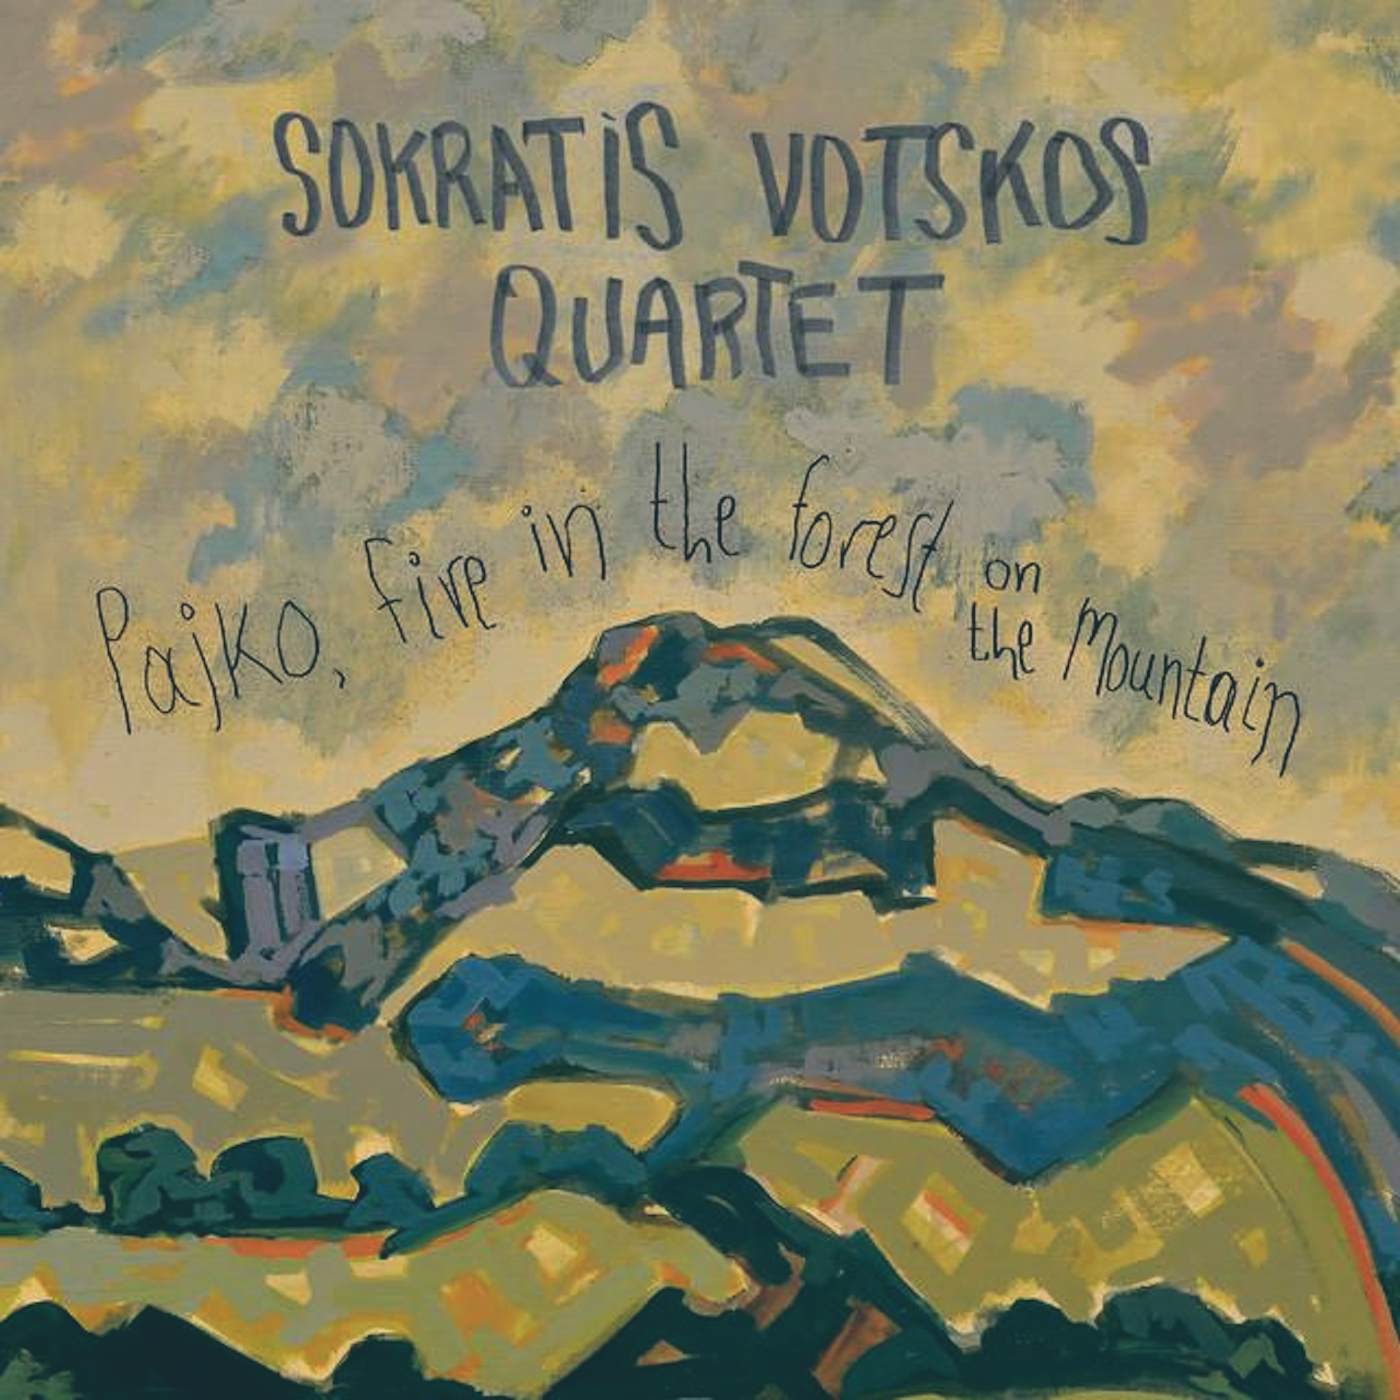 Sokratis Votskos Quartet